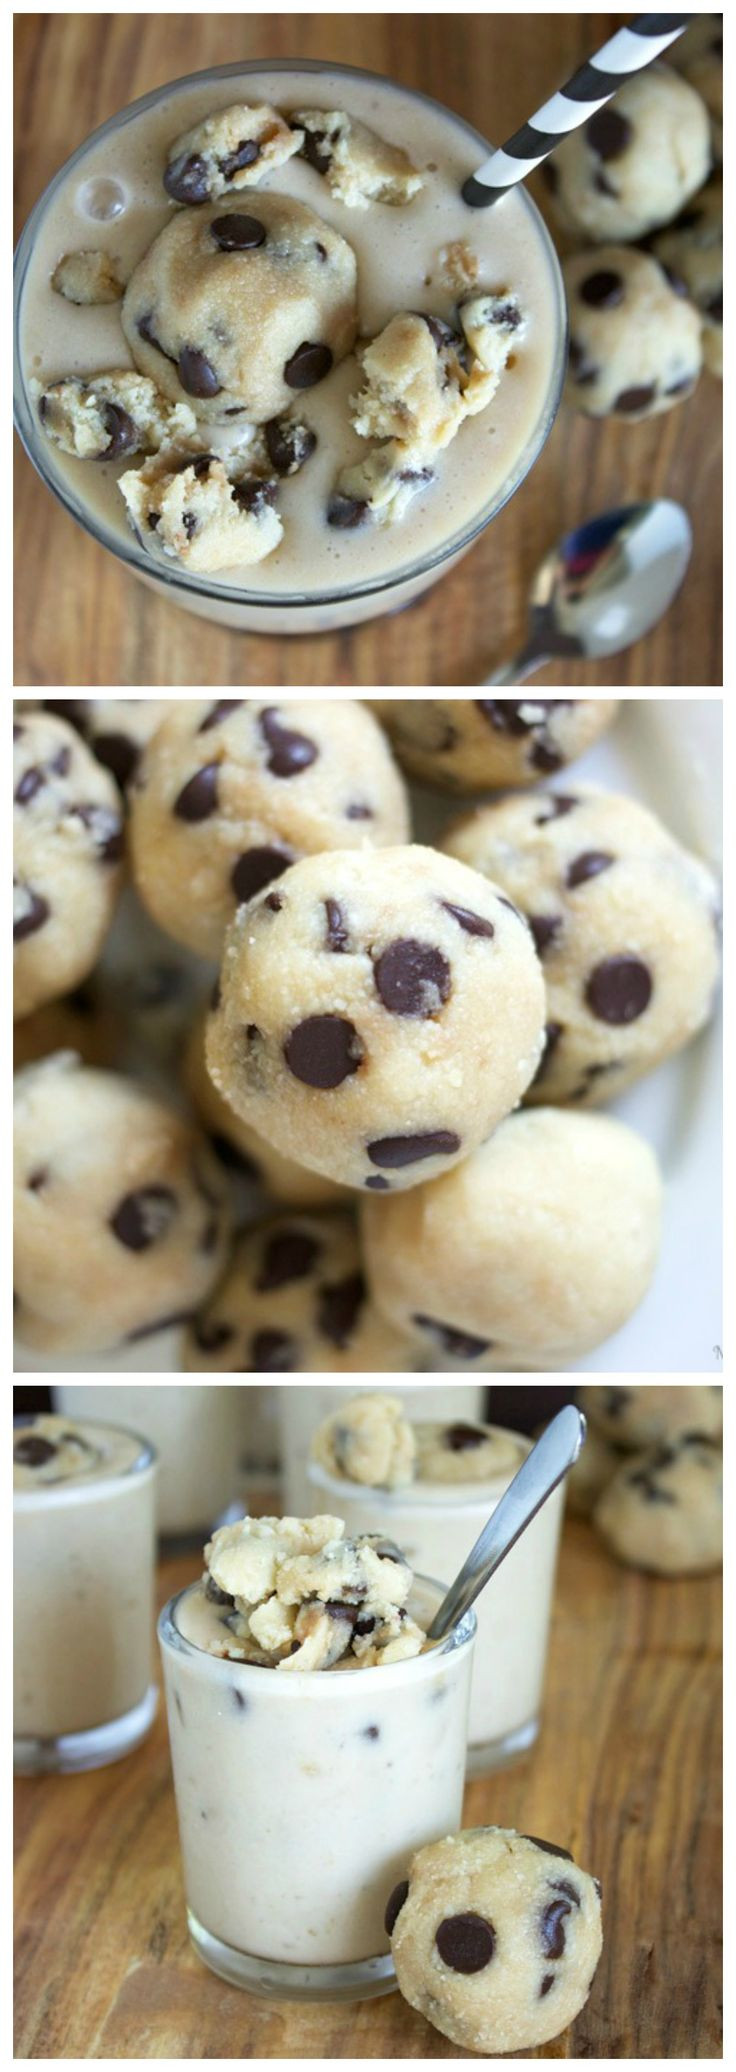 Cookie Dough Desserts
 25 best ideas about Cookie Dough Desserts on Pinterest